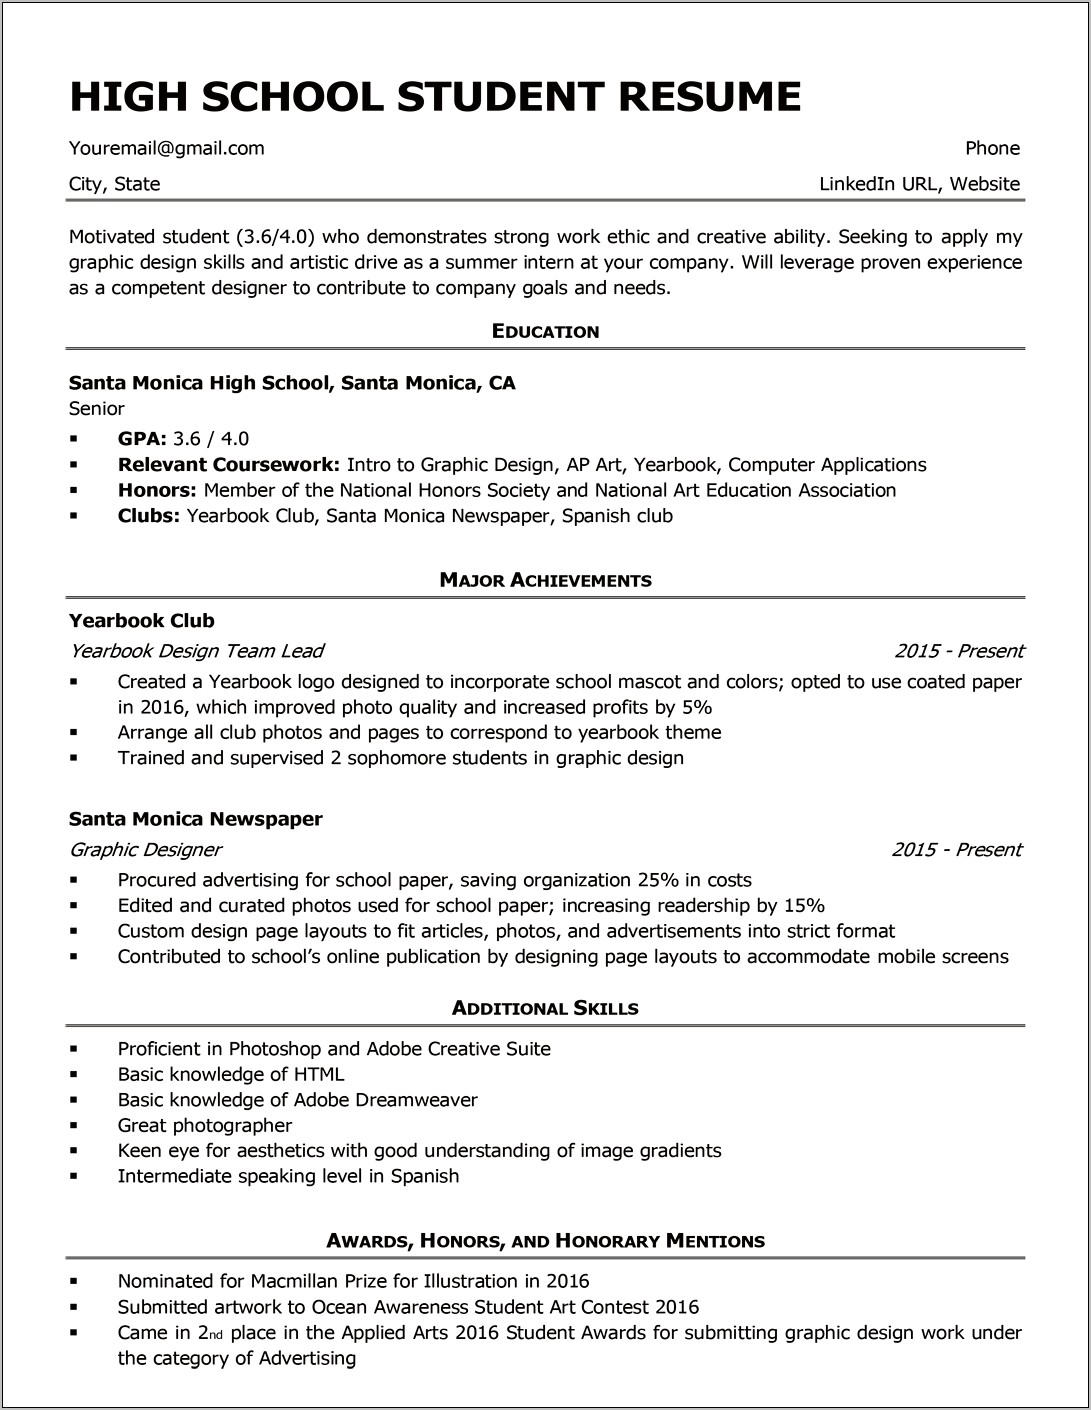 Resume For High School Summer Job